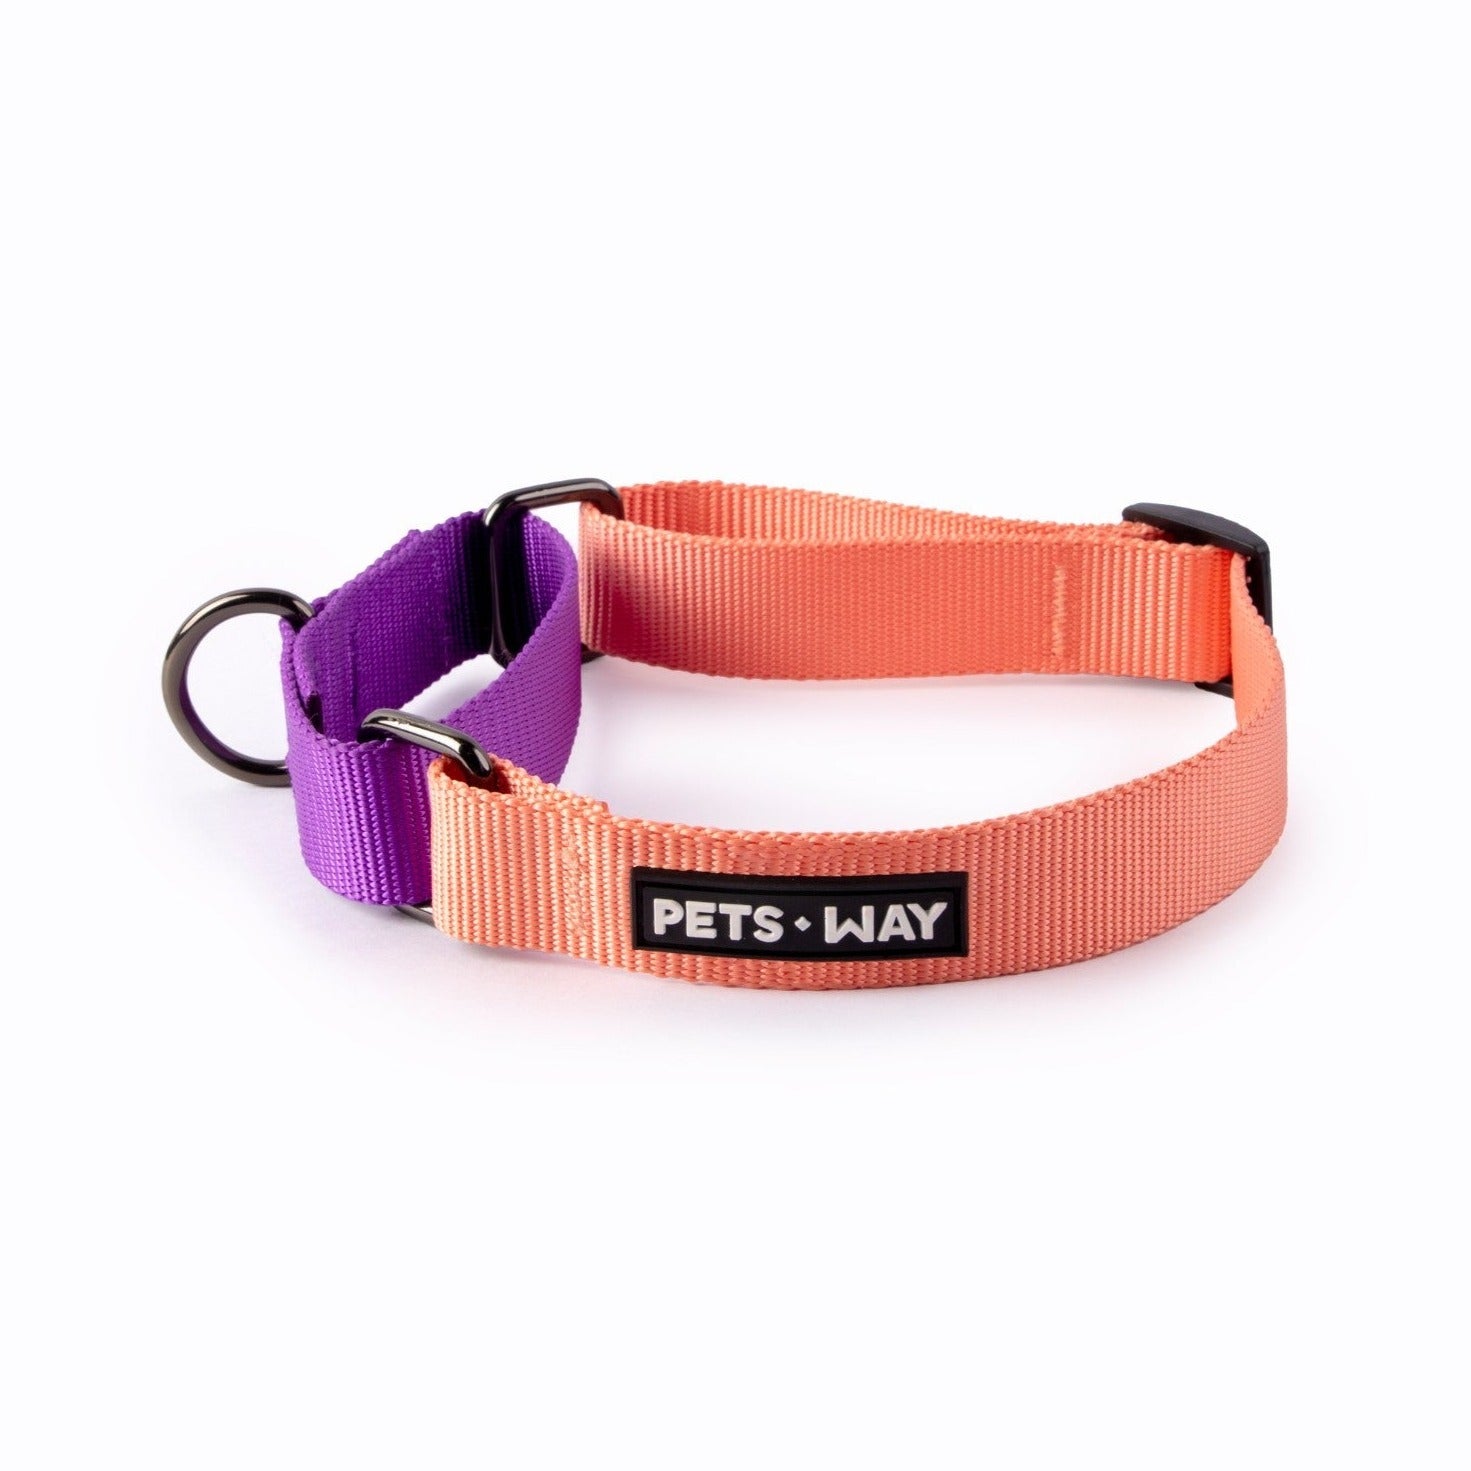 Pets Way Martingale Collar - Peach & Amethyst